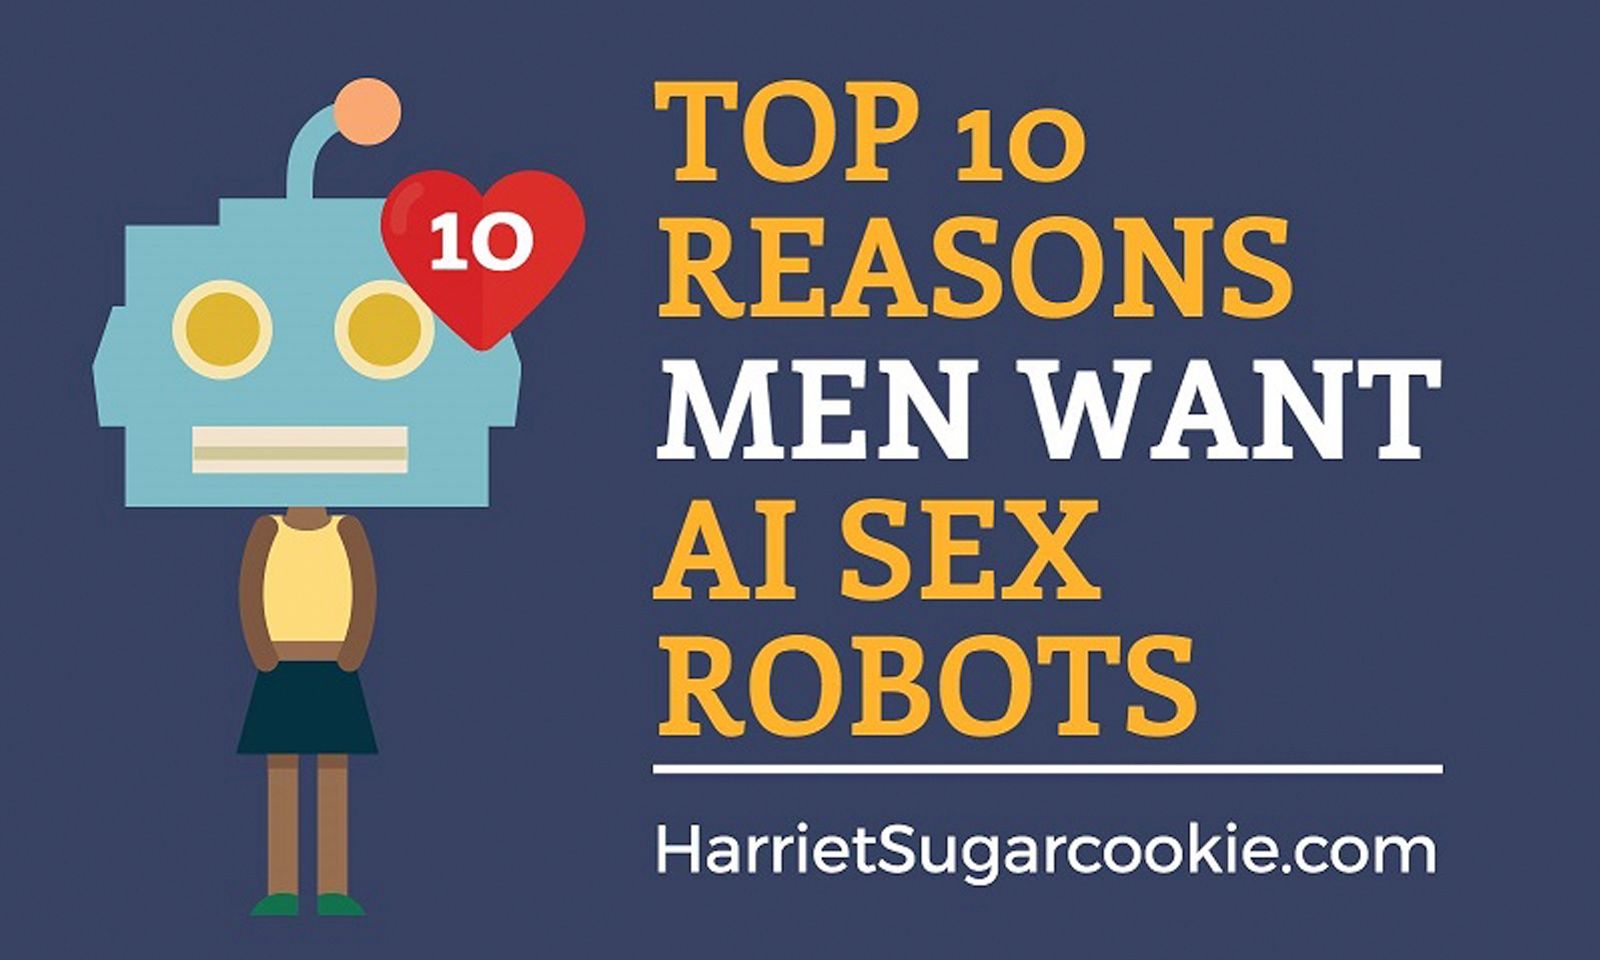 HarrietSugarcookie.com Examines Men’s Attraction To Sex Robots